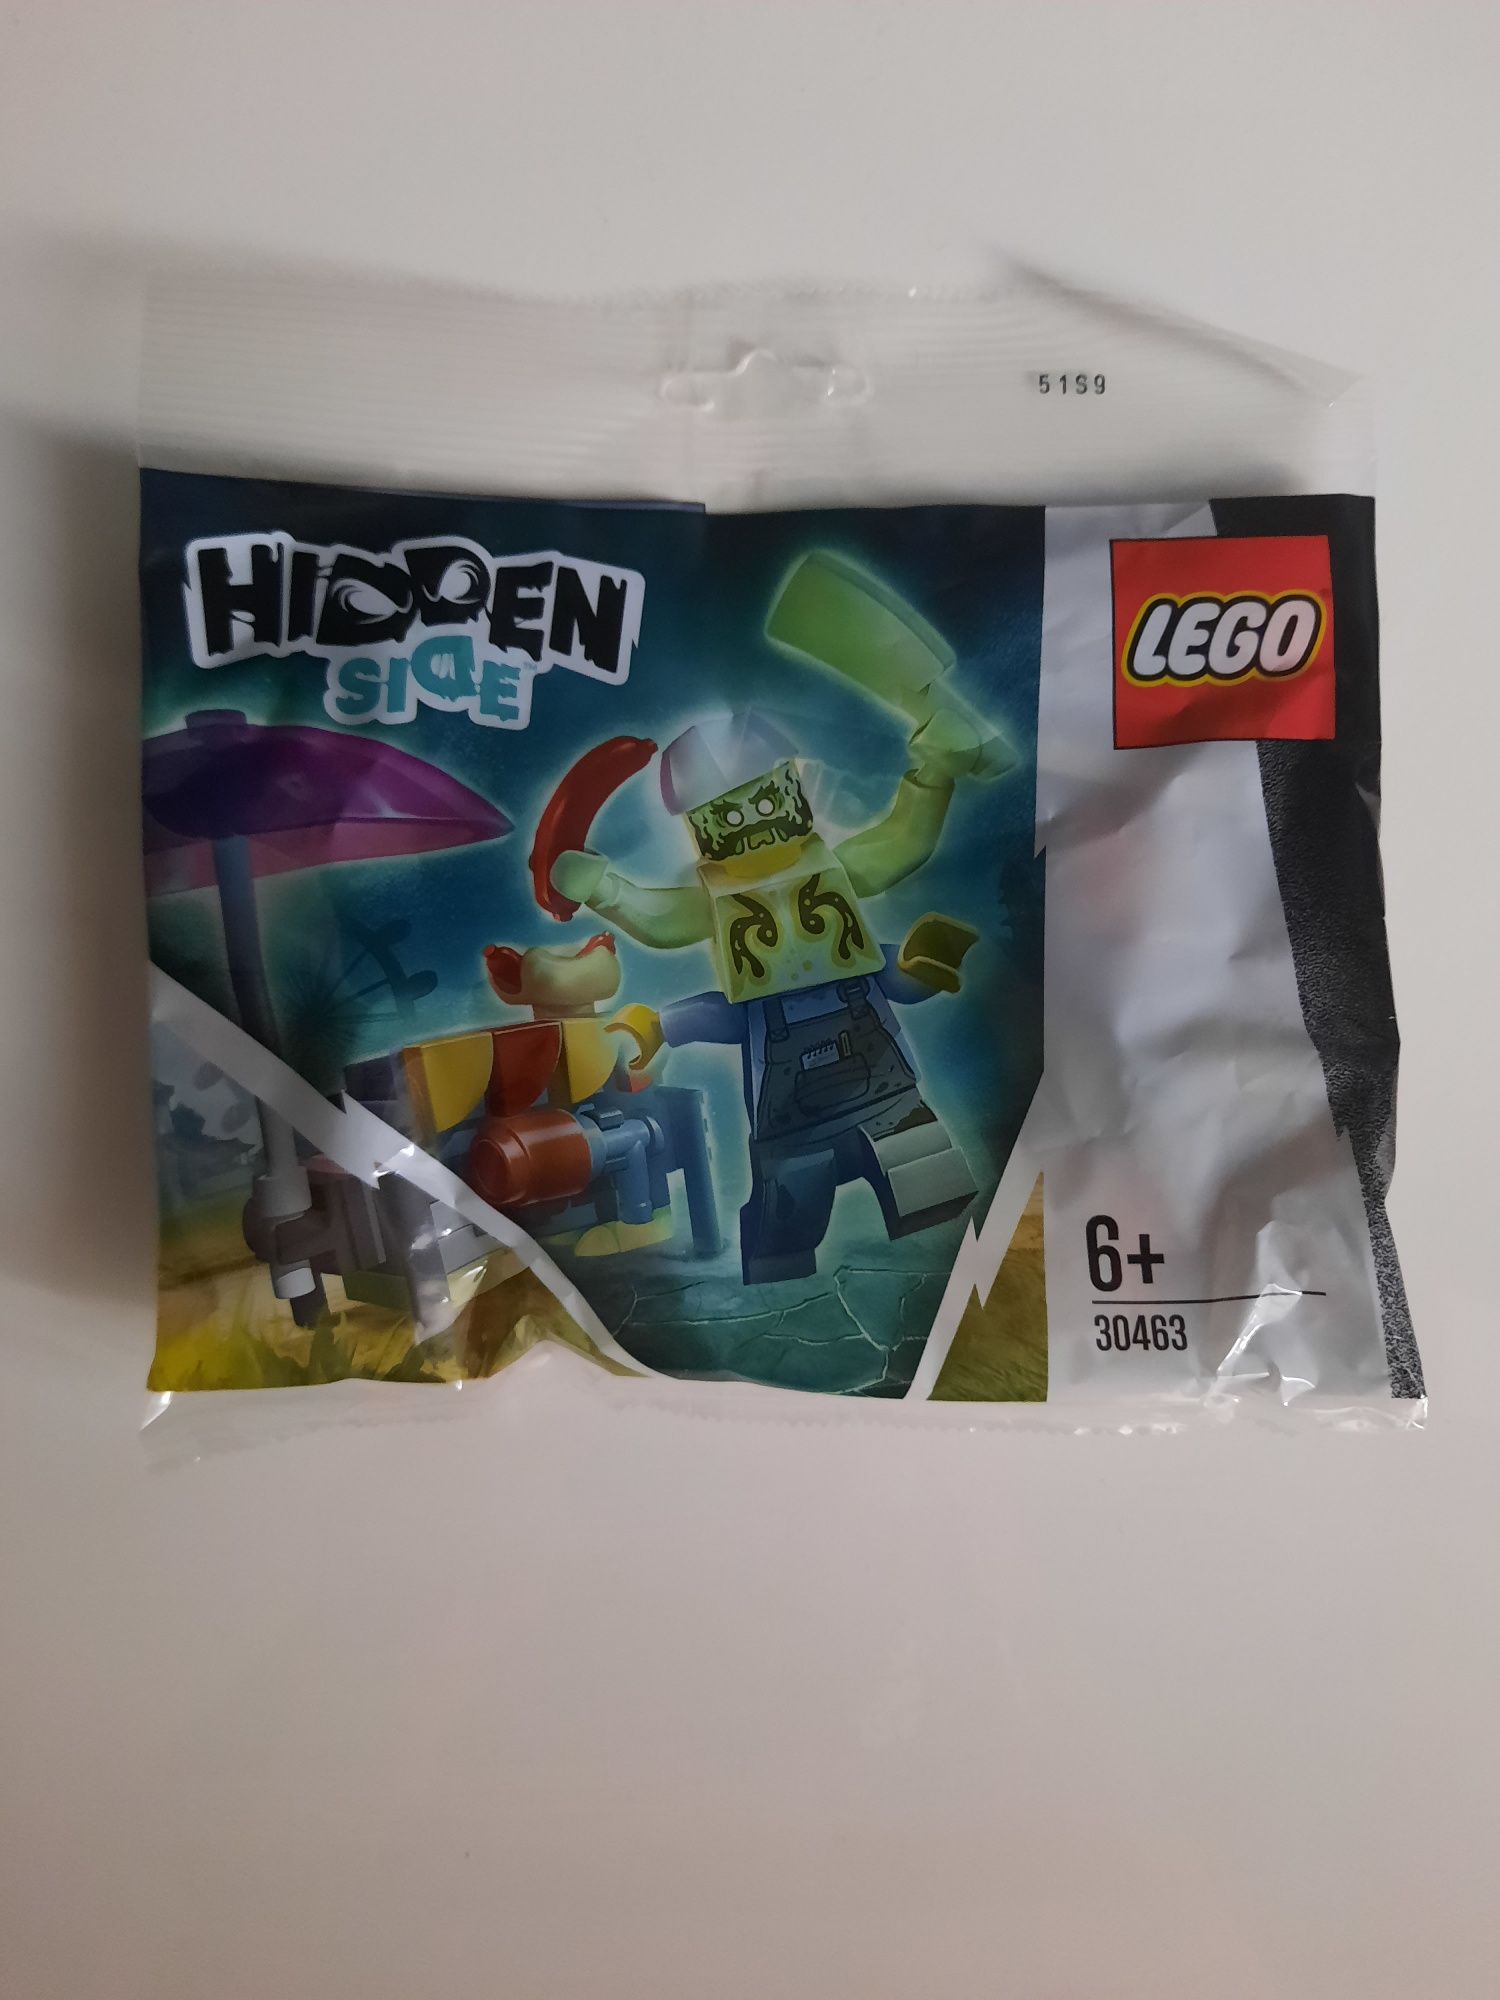 Lego Hidden Side 30463